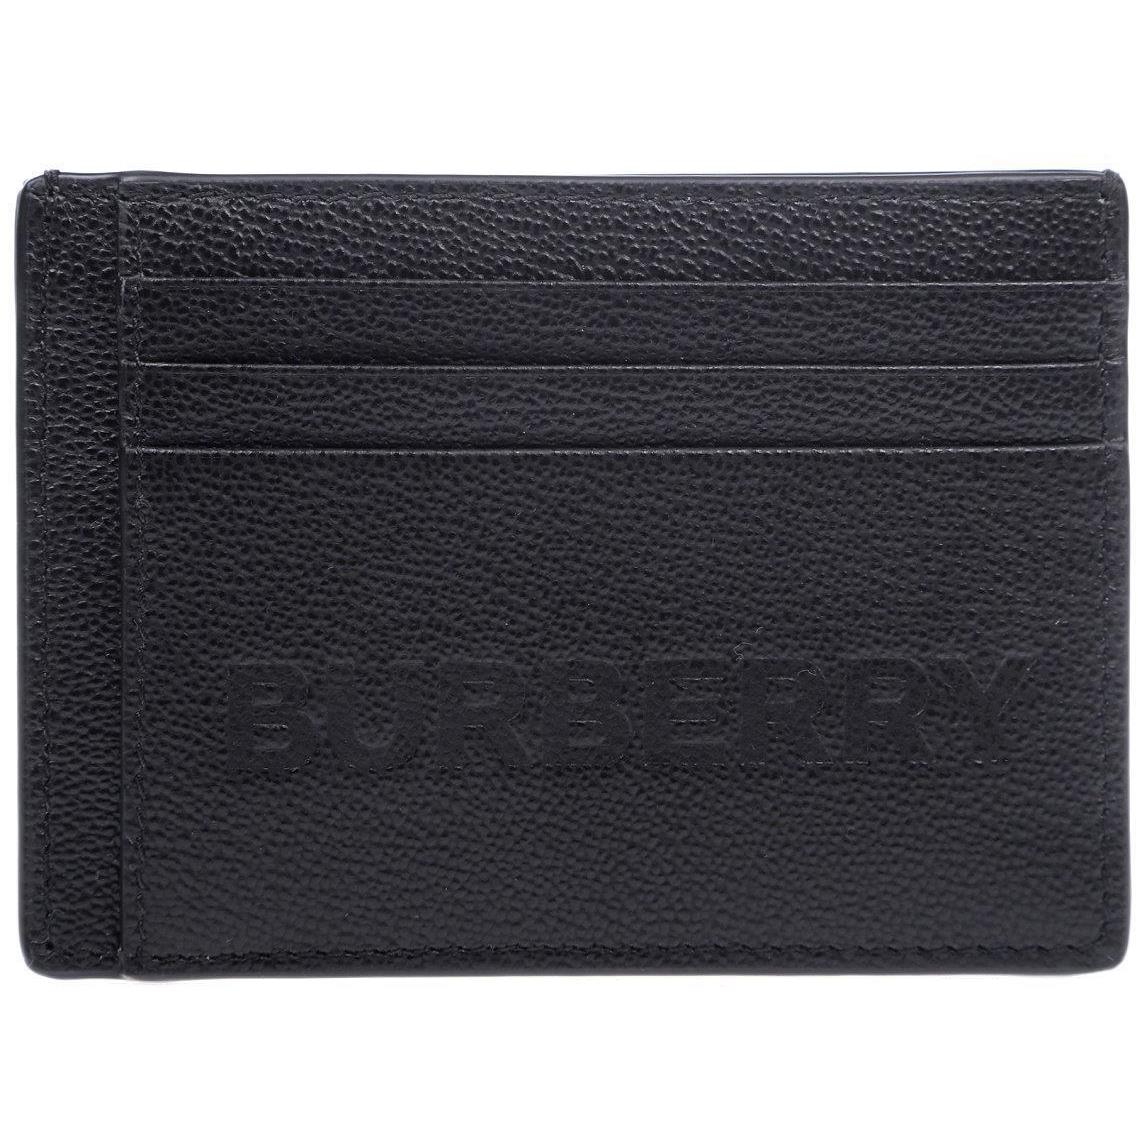 Burberry Men`s Black Textured Leather Credit Card Holder Money Clip Wallet